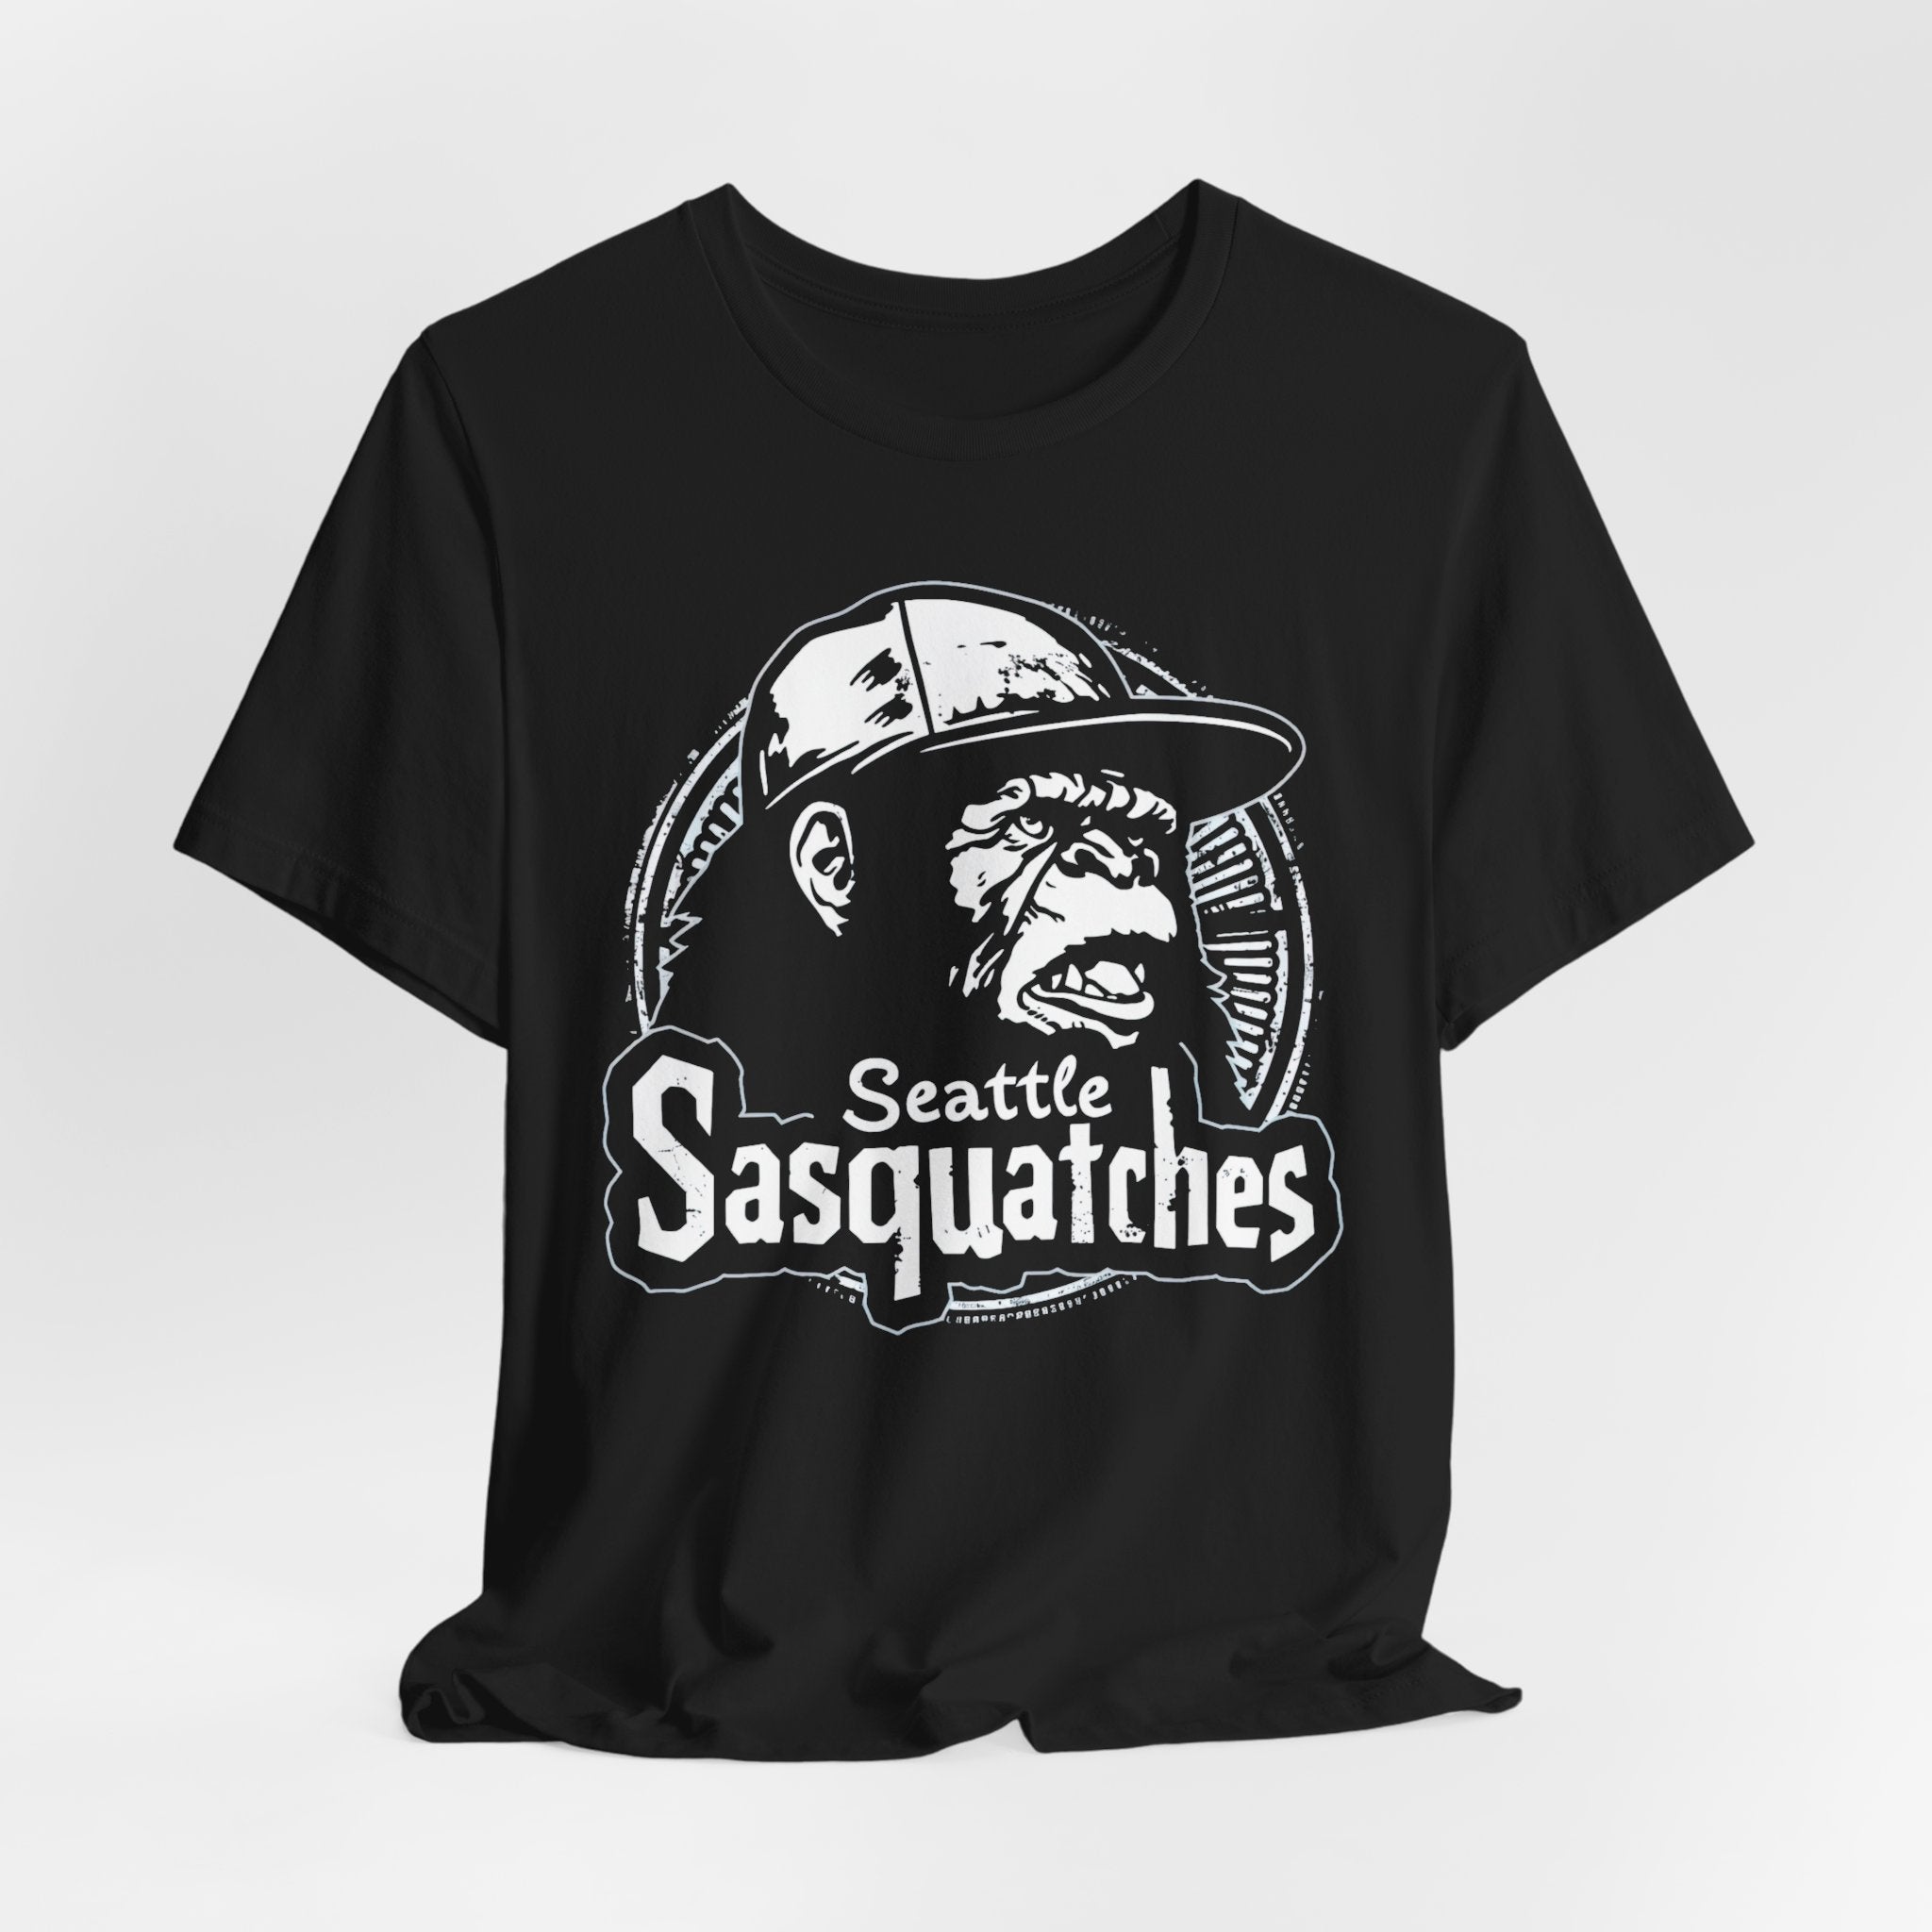 Seattle Sasquatches T-Shirt Baseball Team Graphic Tee